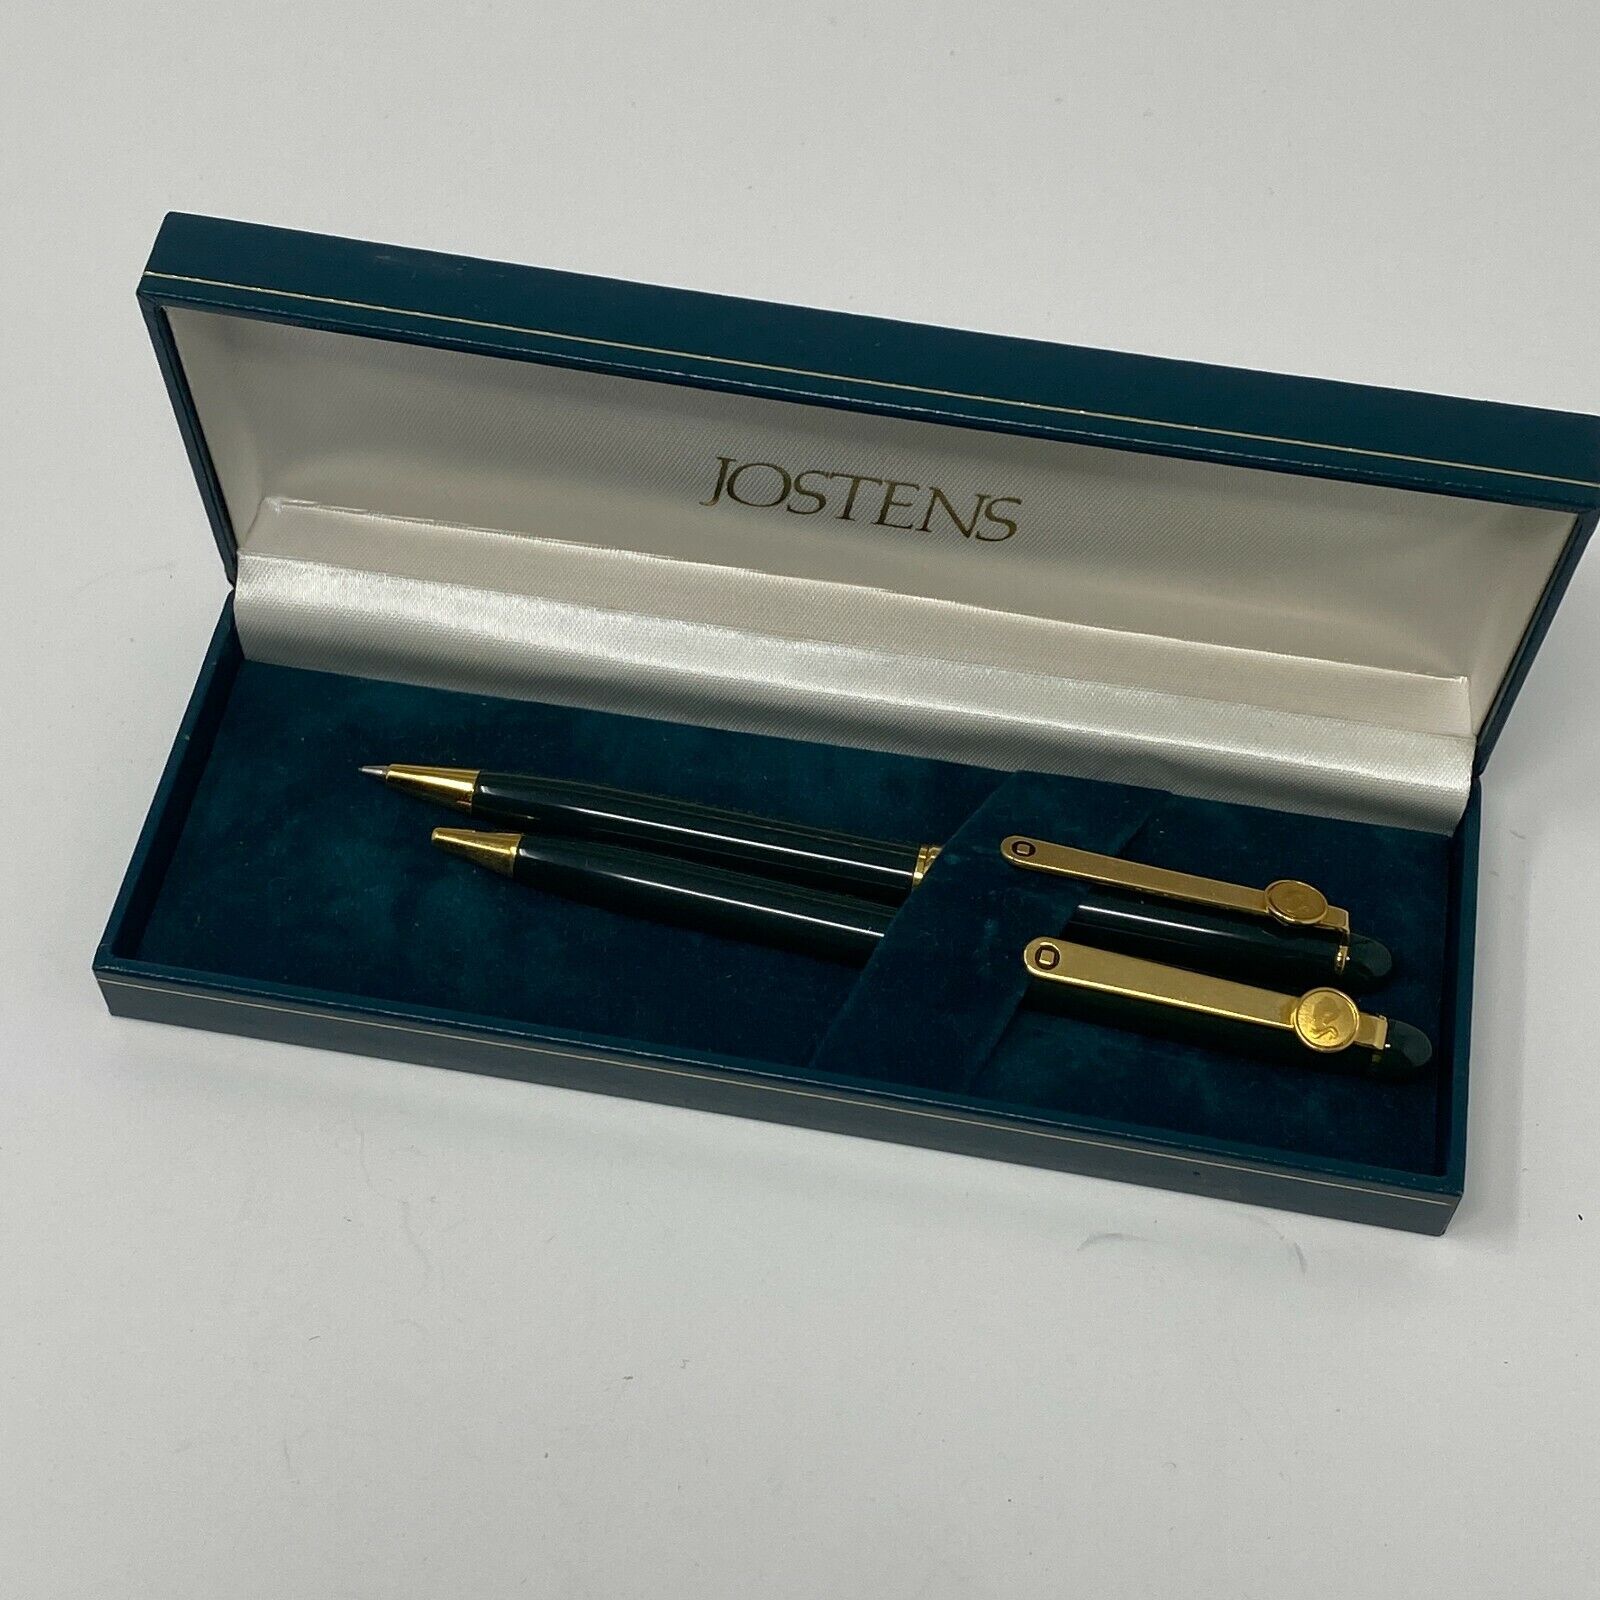 Vintage Jostens Colibri Pen + Mechanical Pencil Set In Original Gift Box - Gold